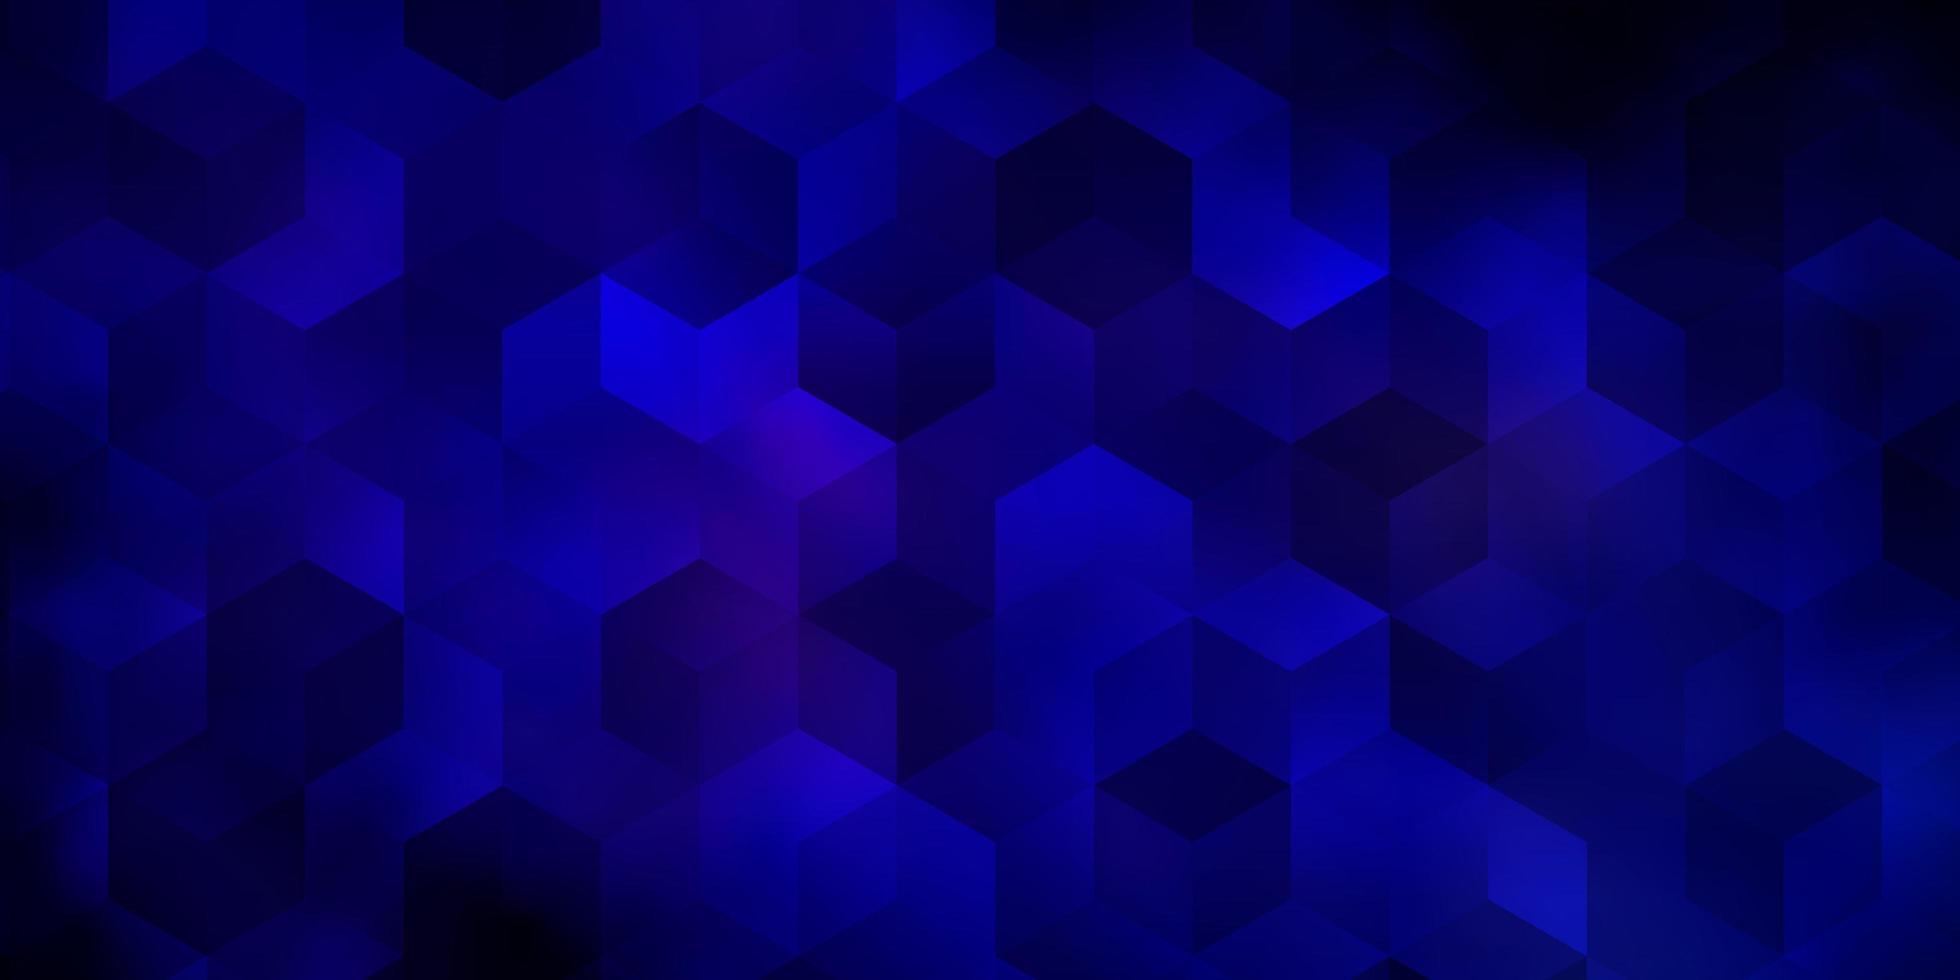 Dark BLUE vector template in hexagonal style.